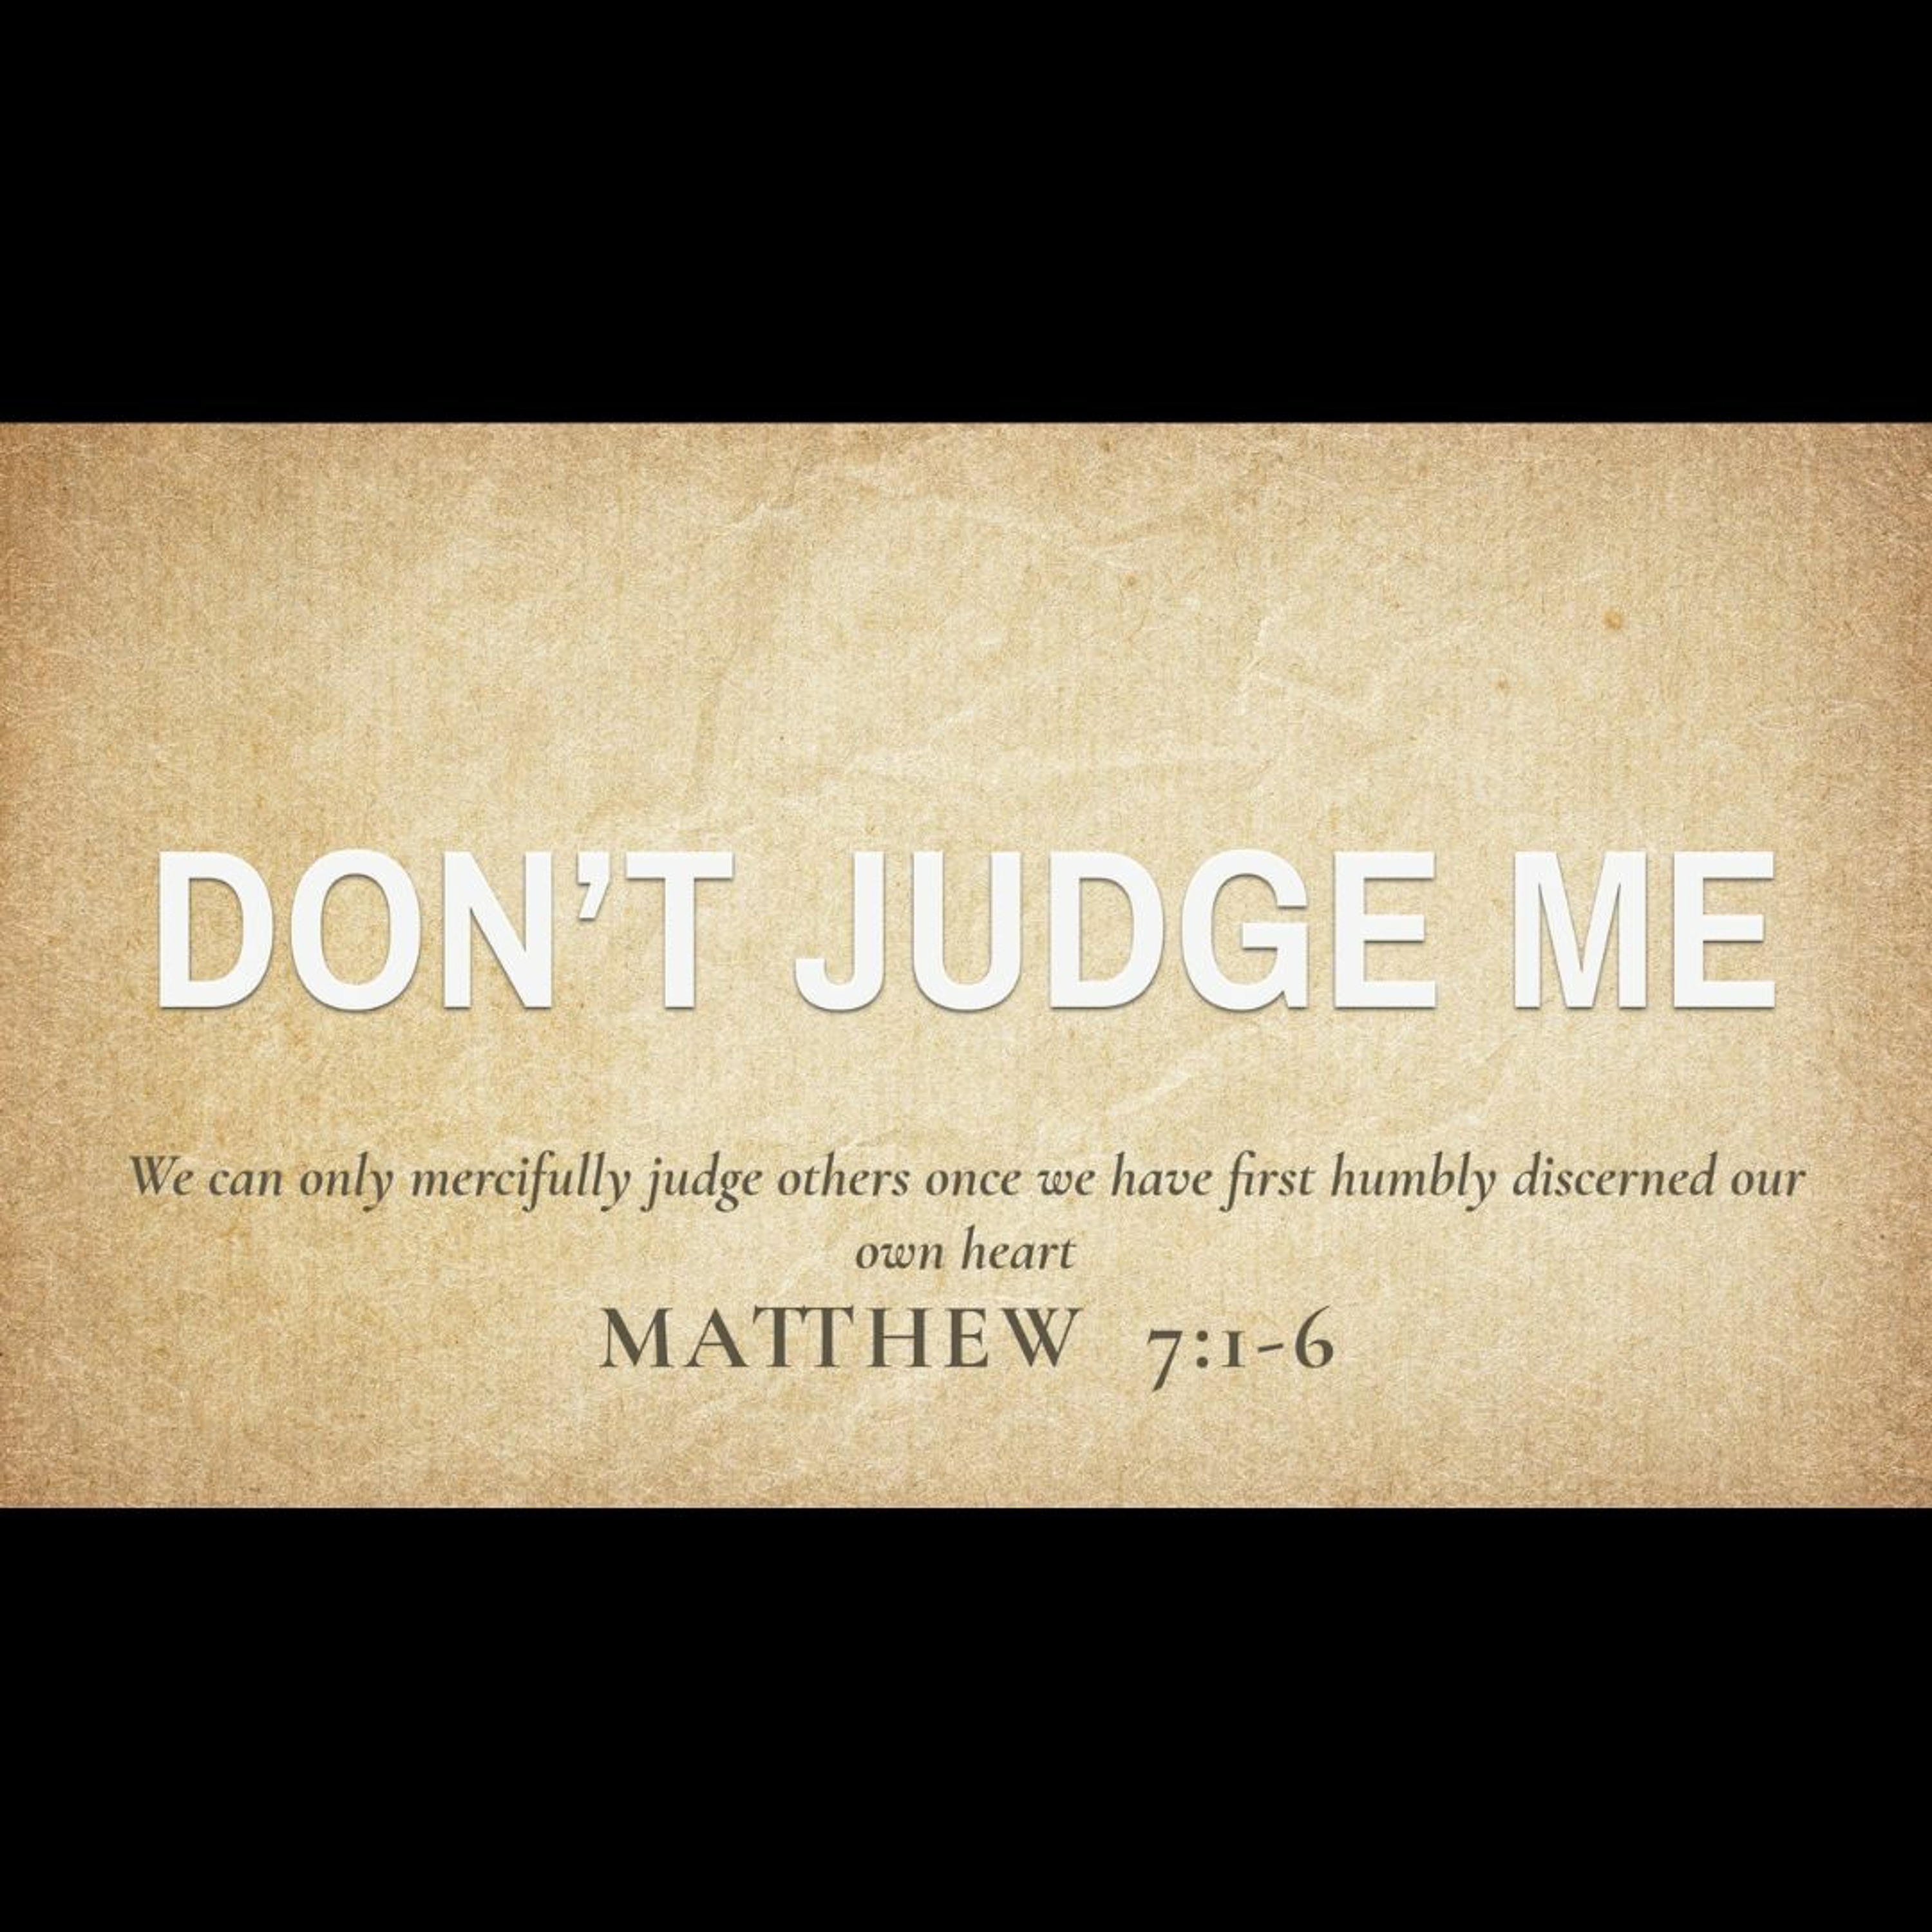 Don't Judge Me (Matthew 7:1-6)